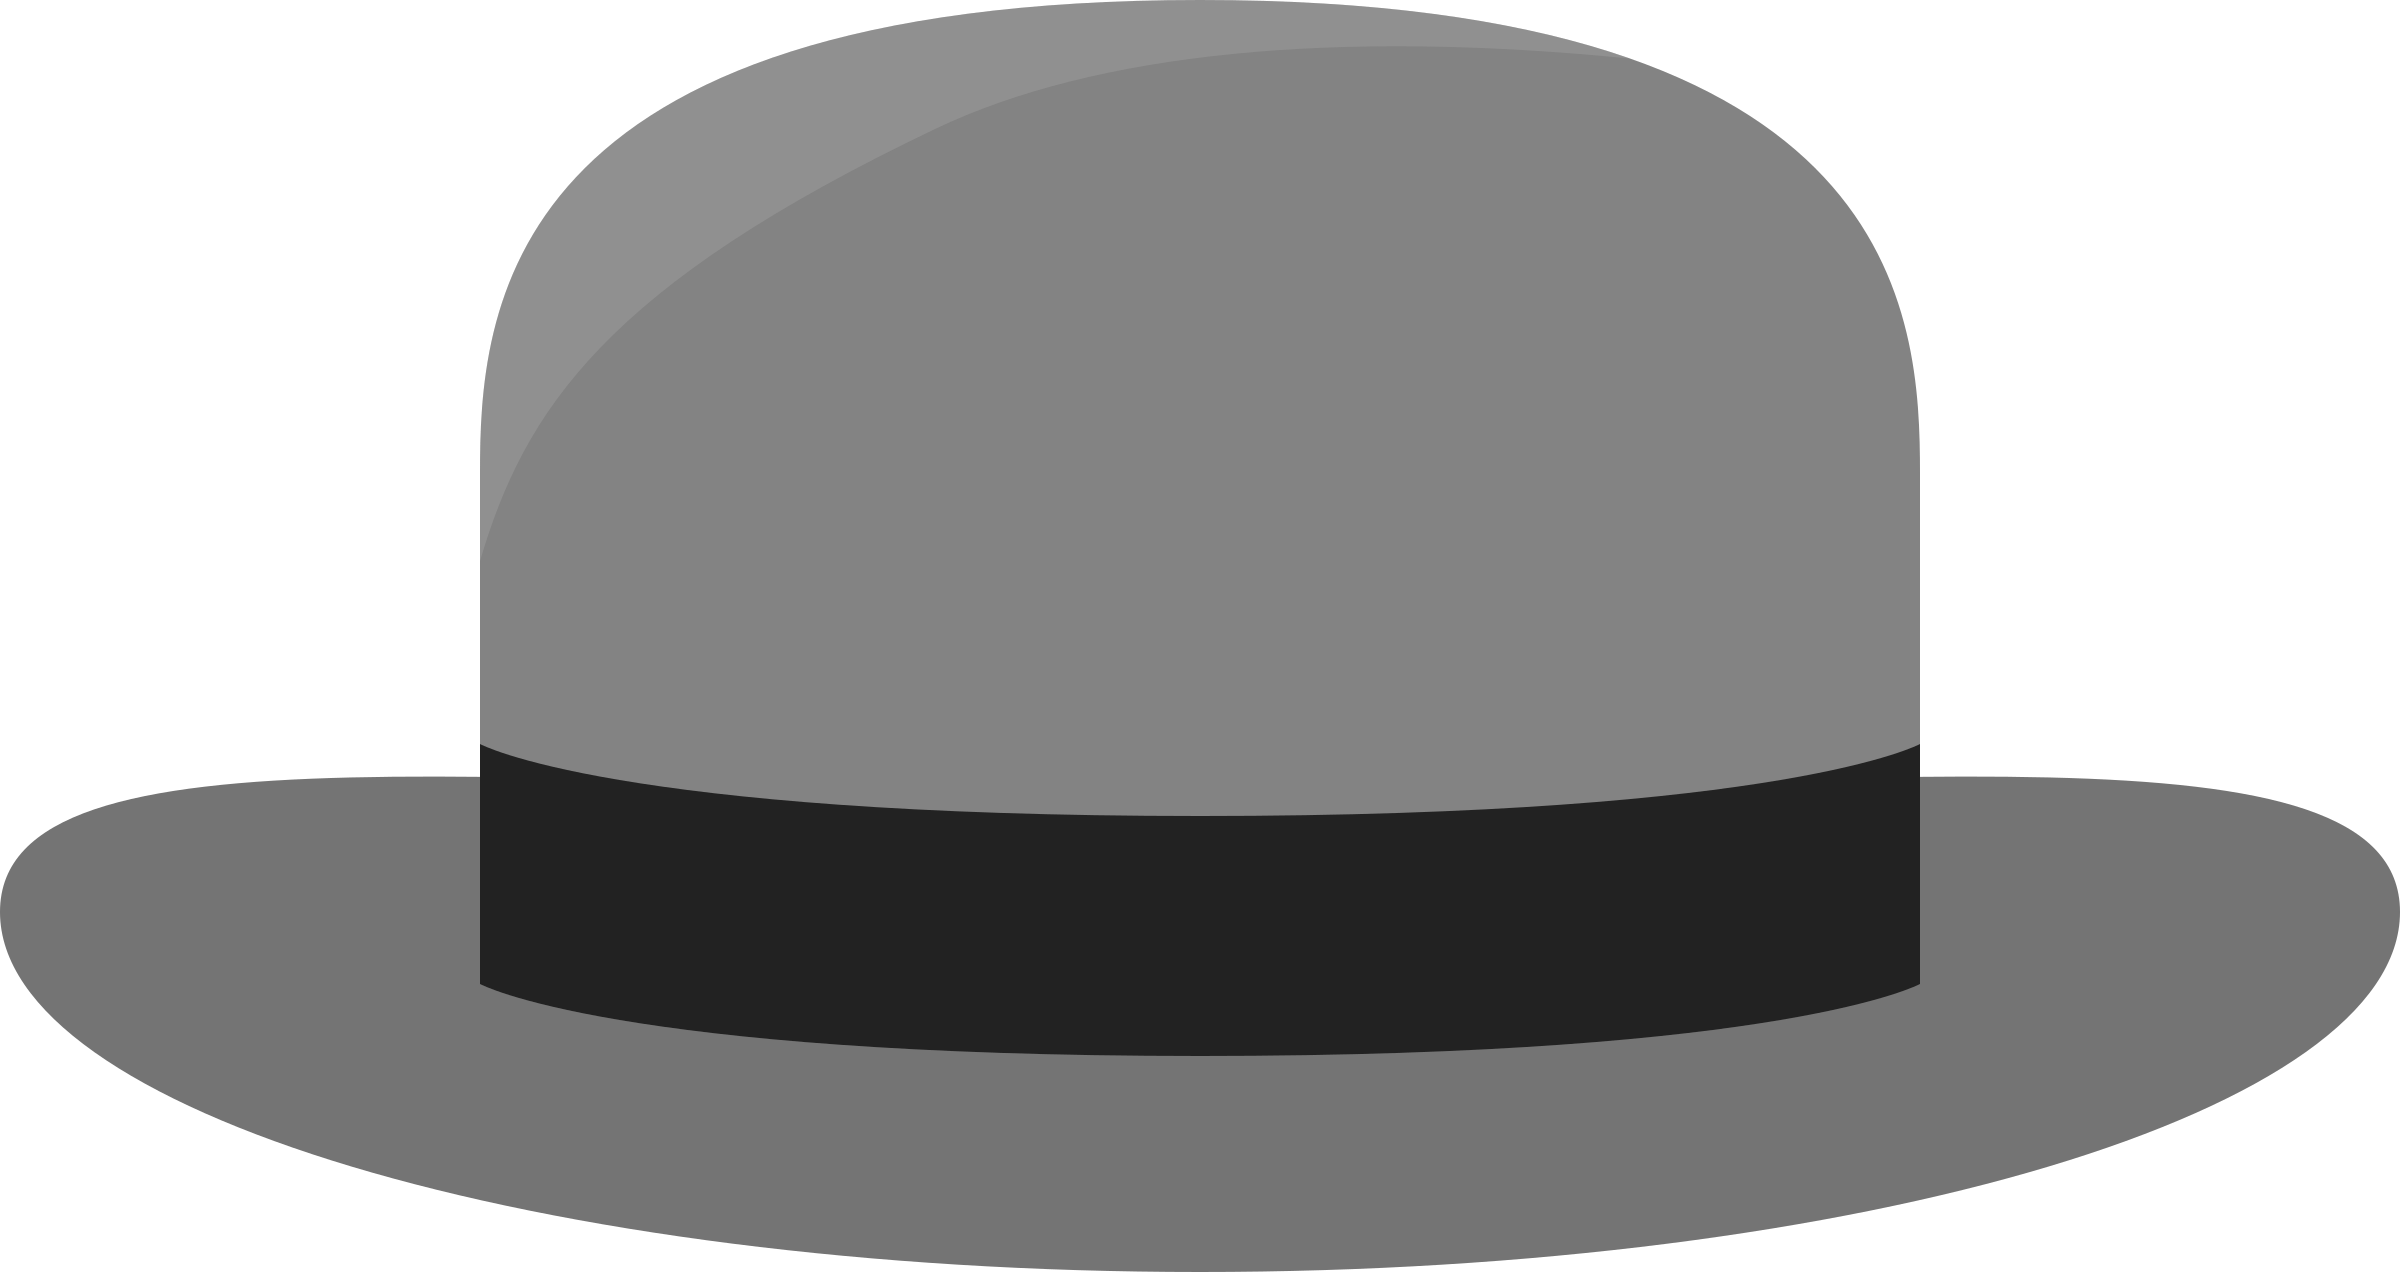 bowler hat clip art